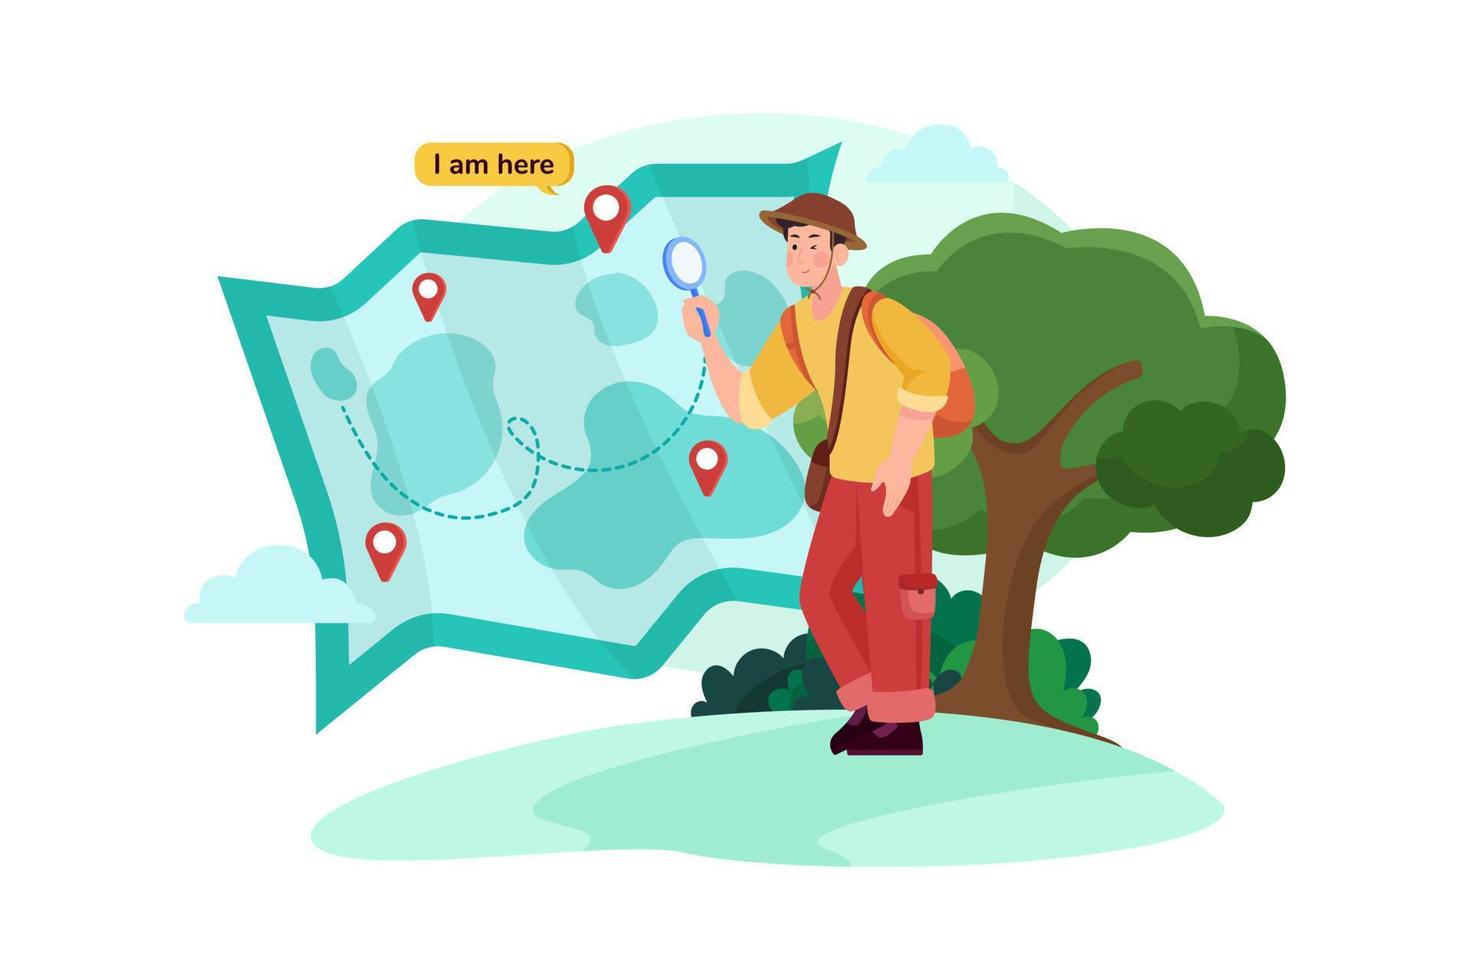 pasajero masculino está buscando un destino turístico en el mapa vector